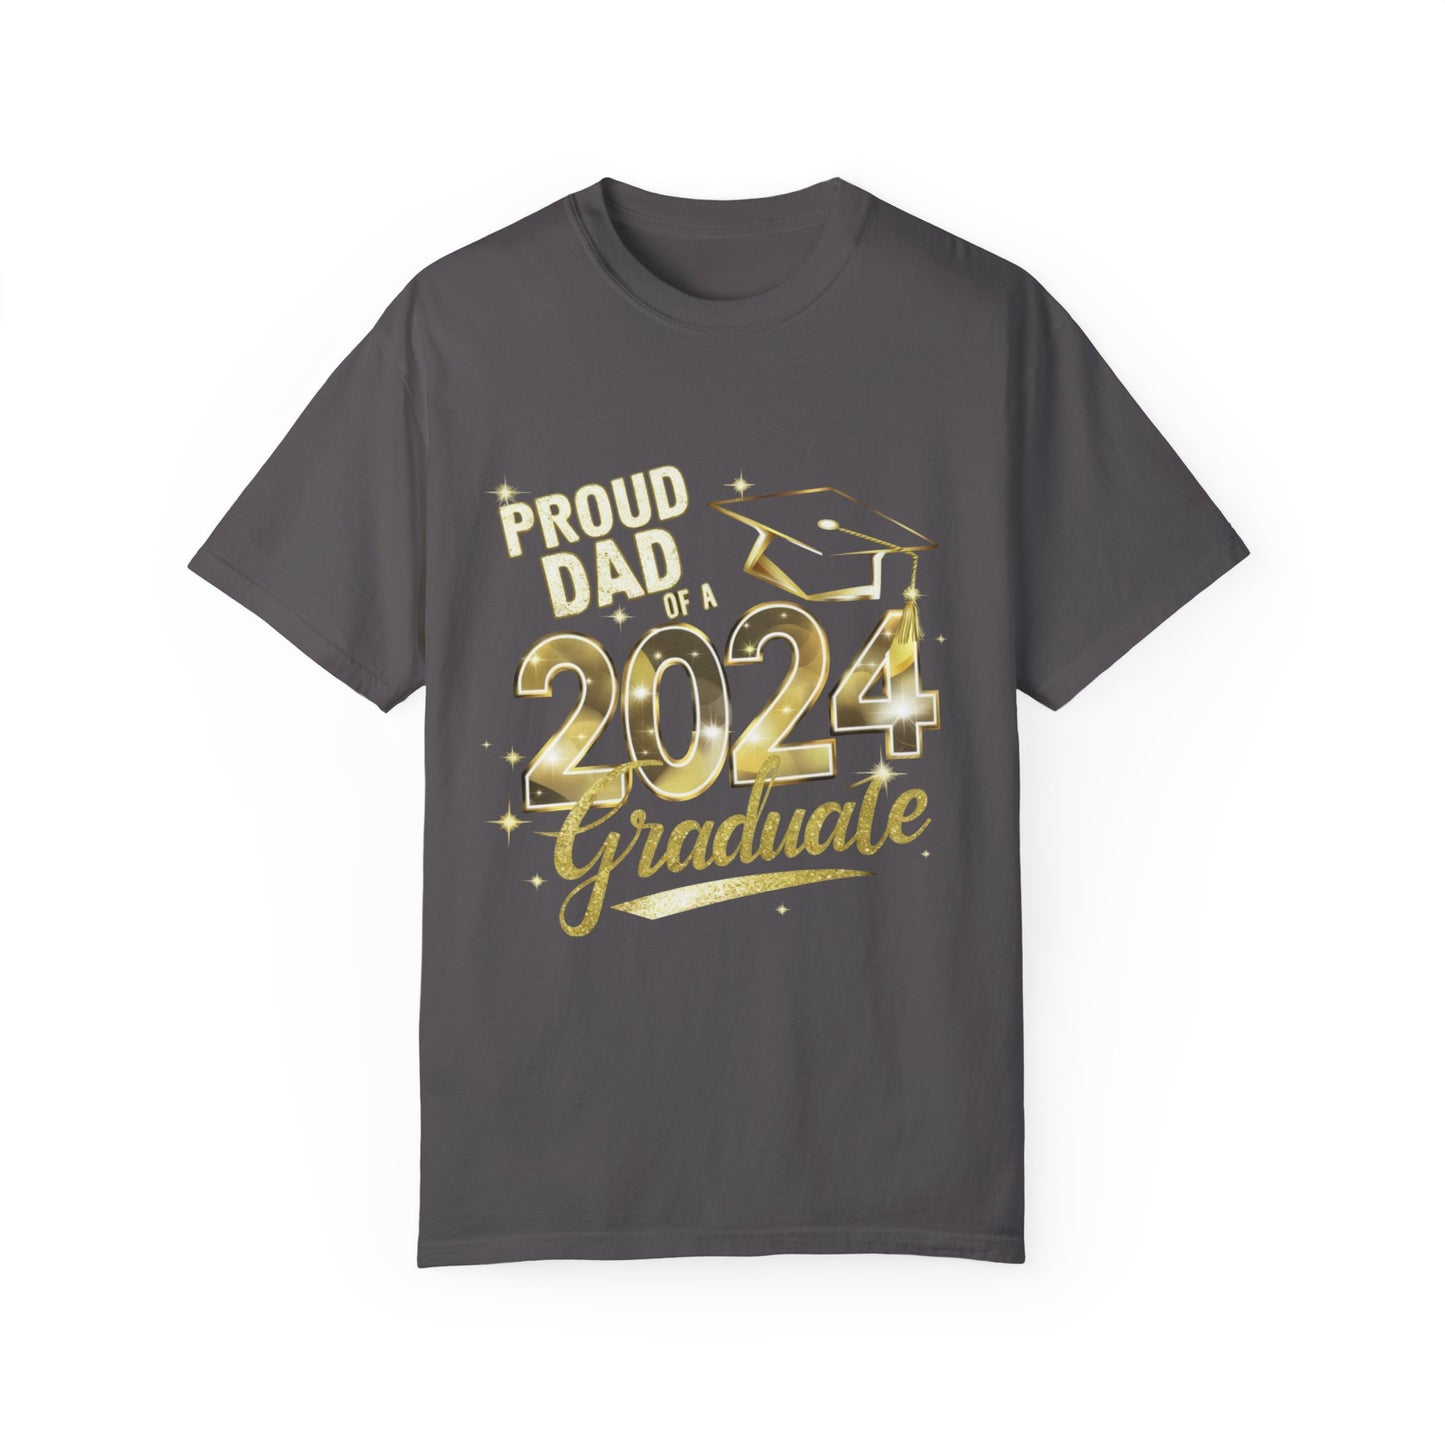 Proud of Dad 2024 Graduate Unisex Garment-dyed T-shirt Cotton Funny Humorous Graphic Soft Premium Unisex Men Women Graphite T-shirt Birthday Gift-8